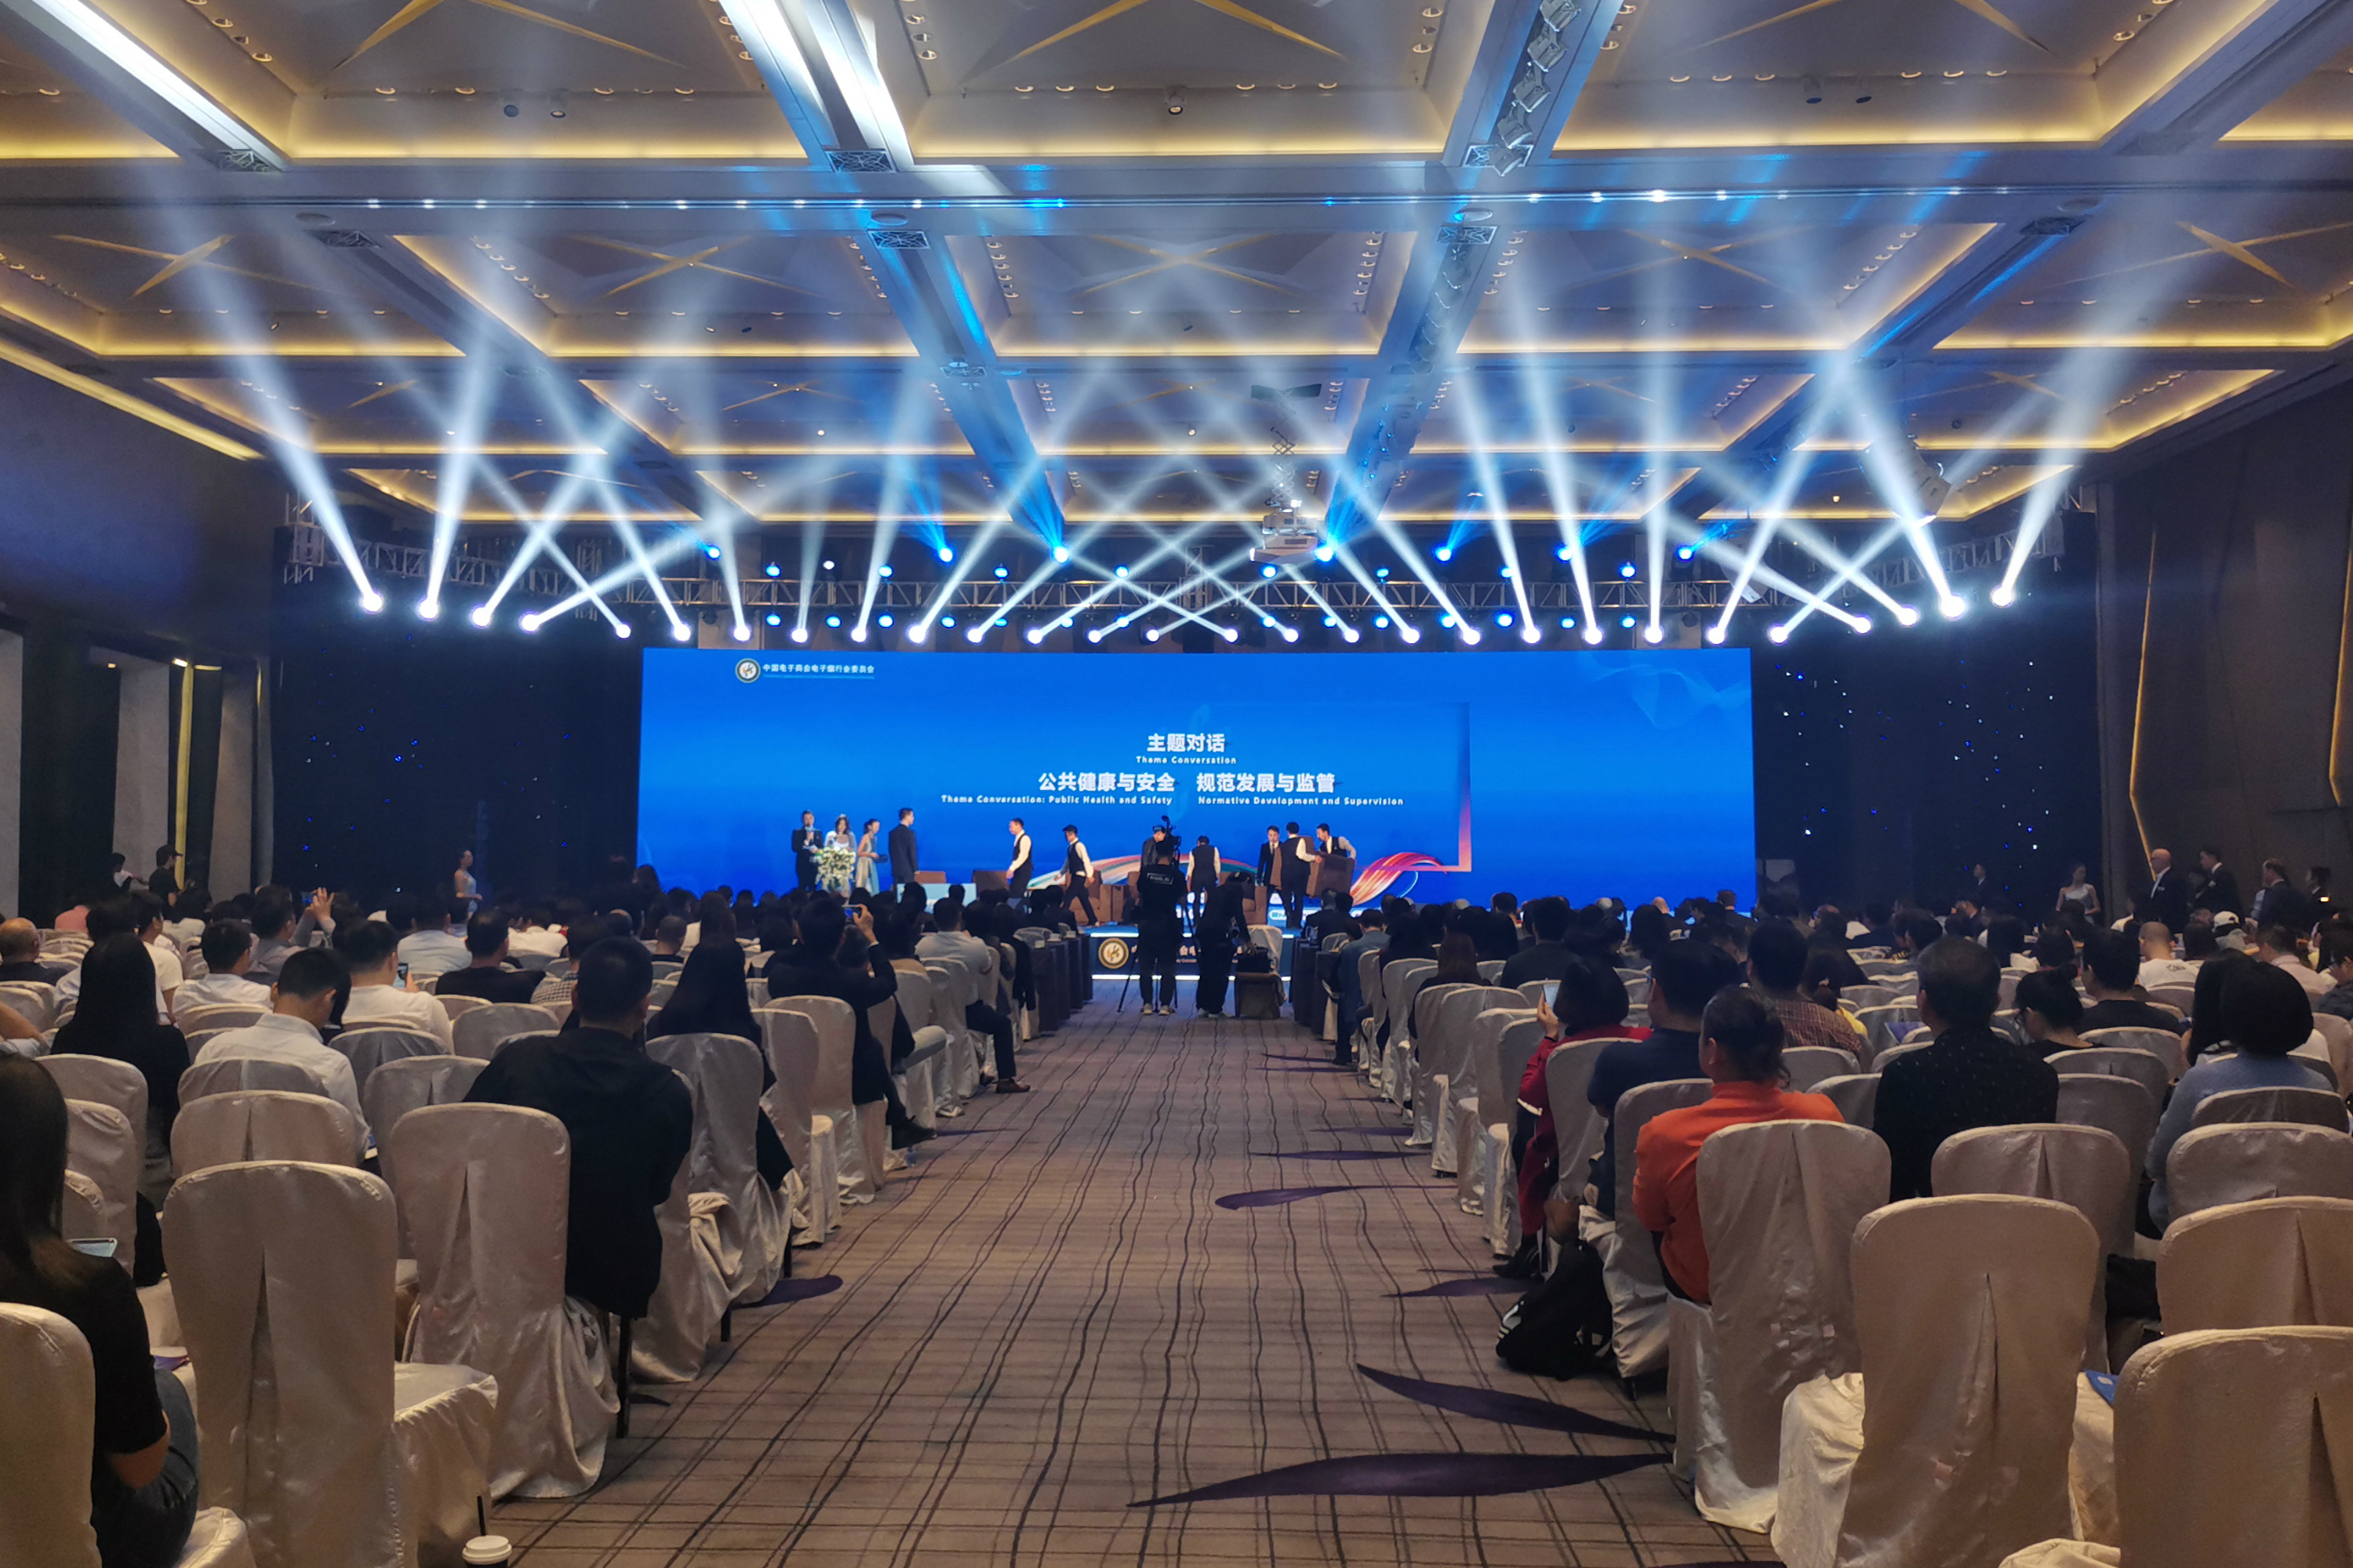 2019 International Electronic Cigarette Summit Forum was grandly held in Shenzhen on December 18